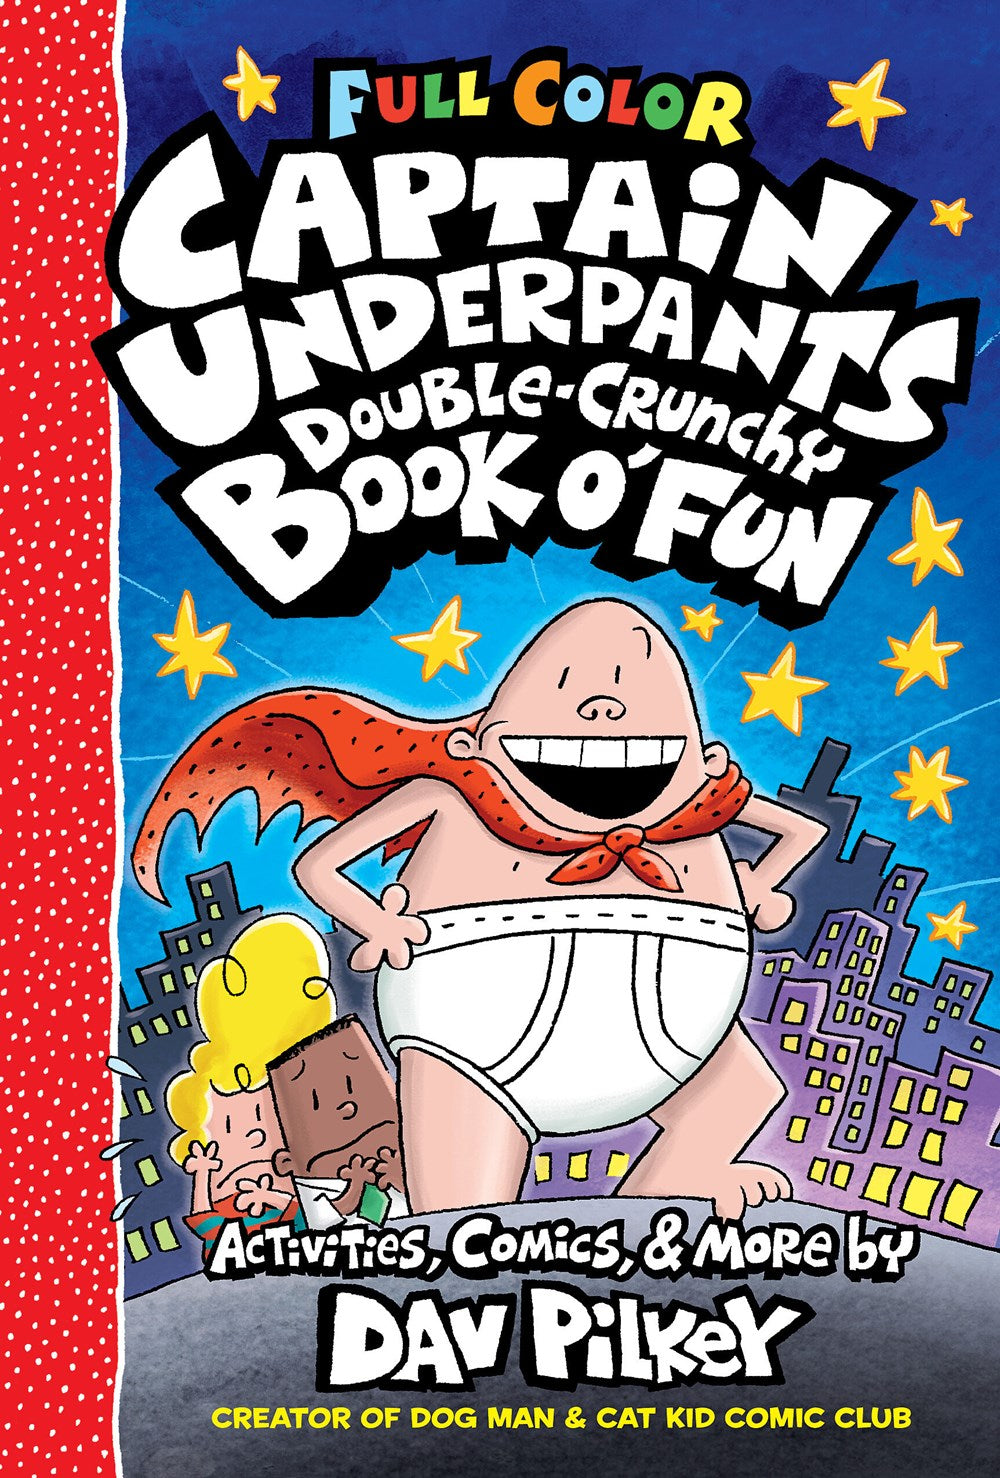 Captain Underpants: The Double-Crunchy Book o' Fun: Color Edition